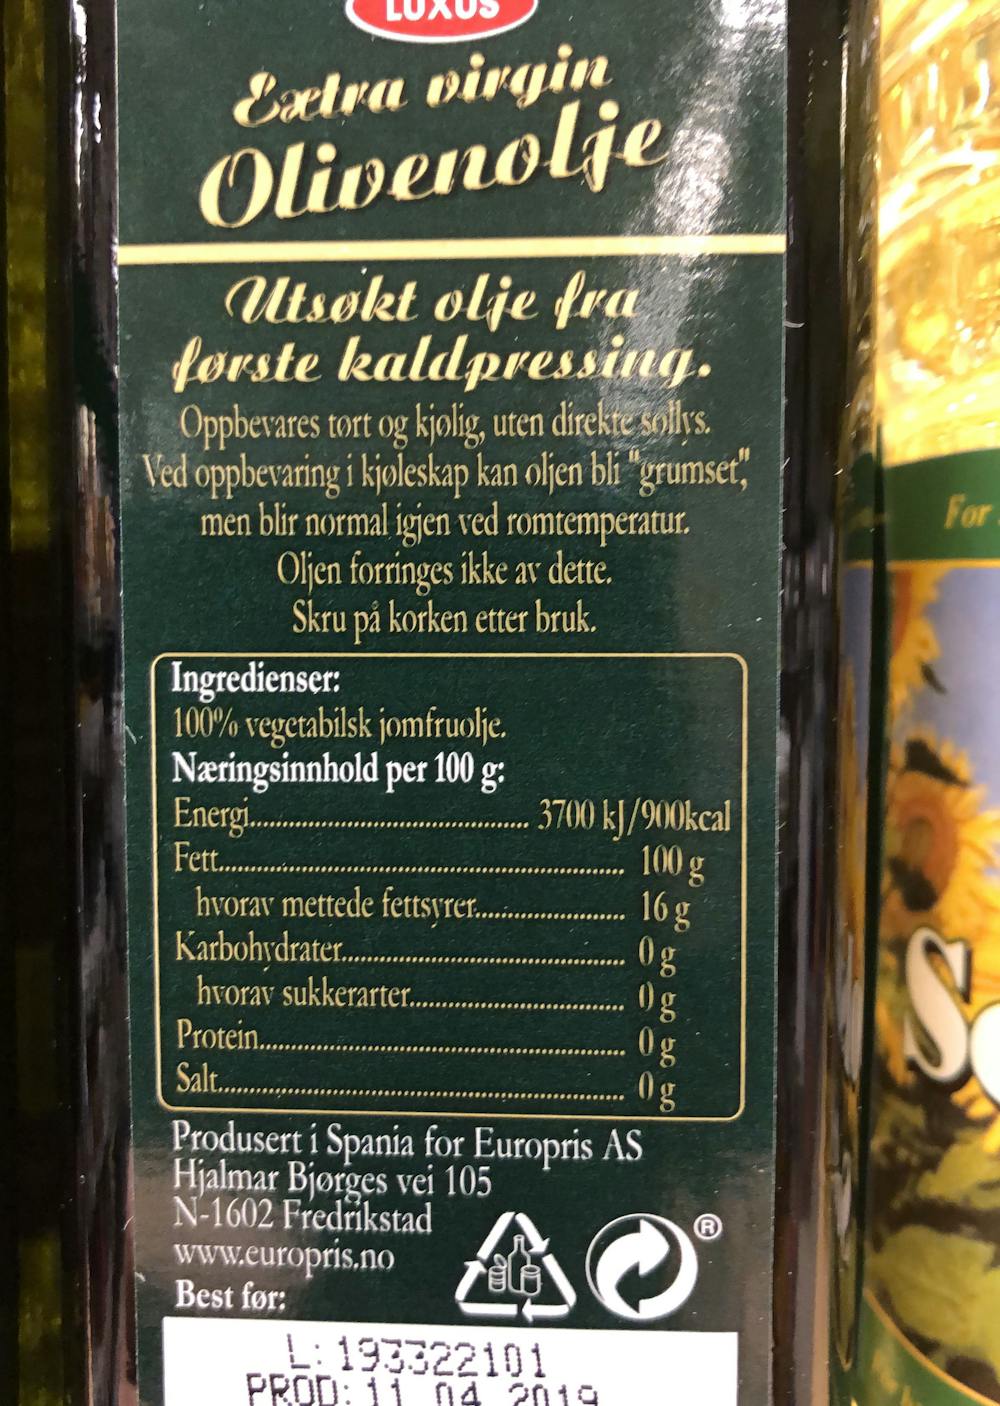 Ingredienslisten til Luxus Extra virgin Olivenolje